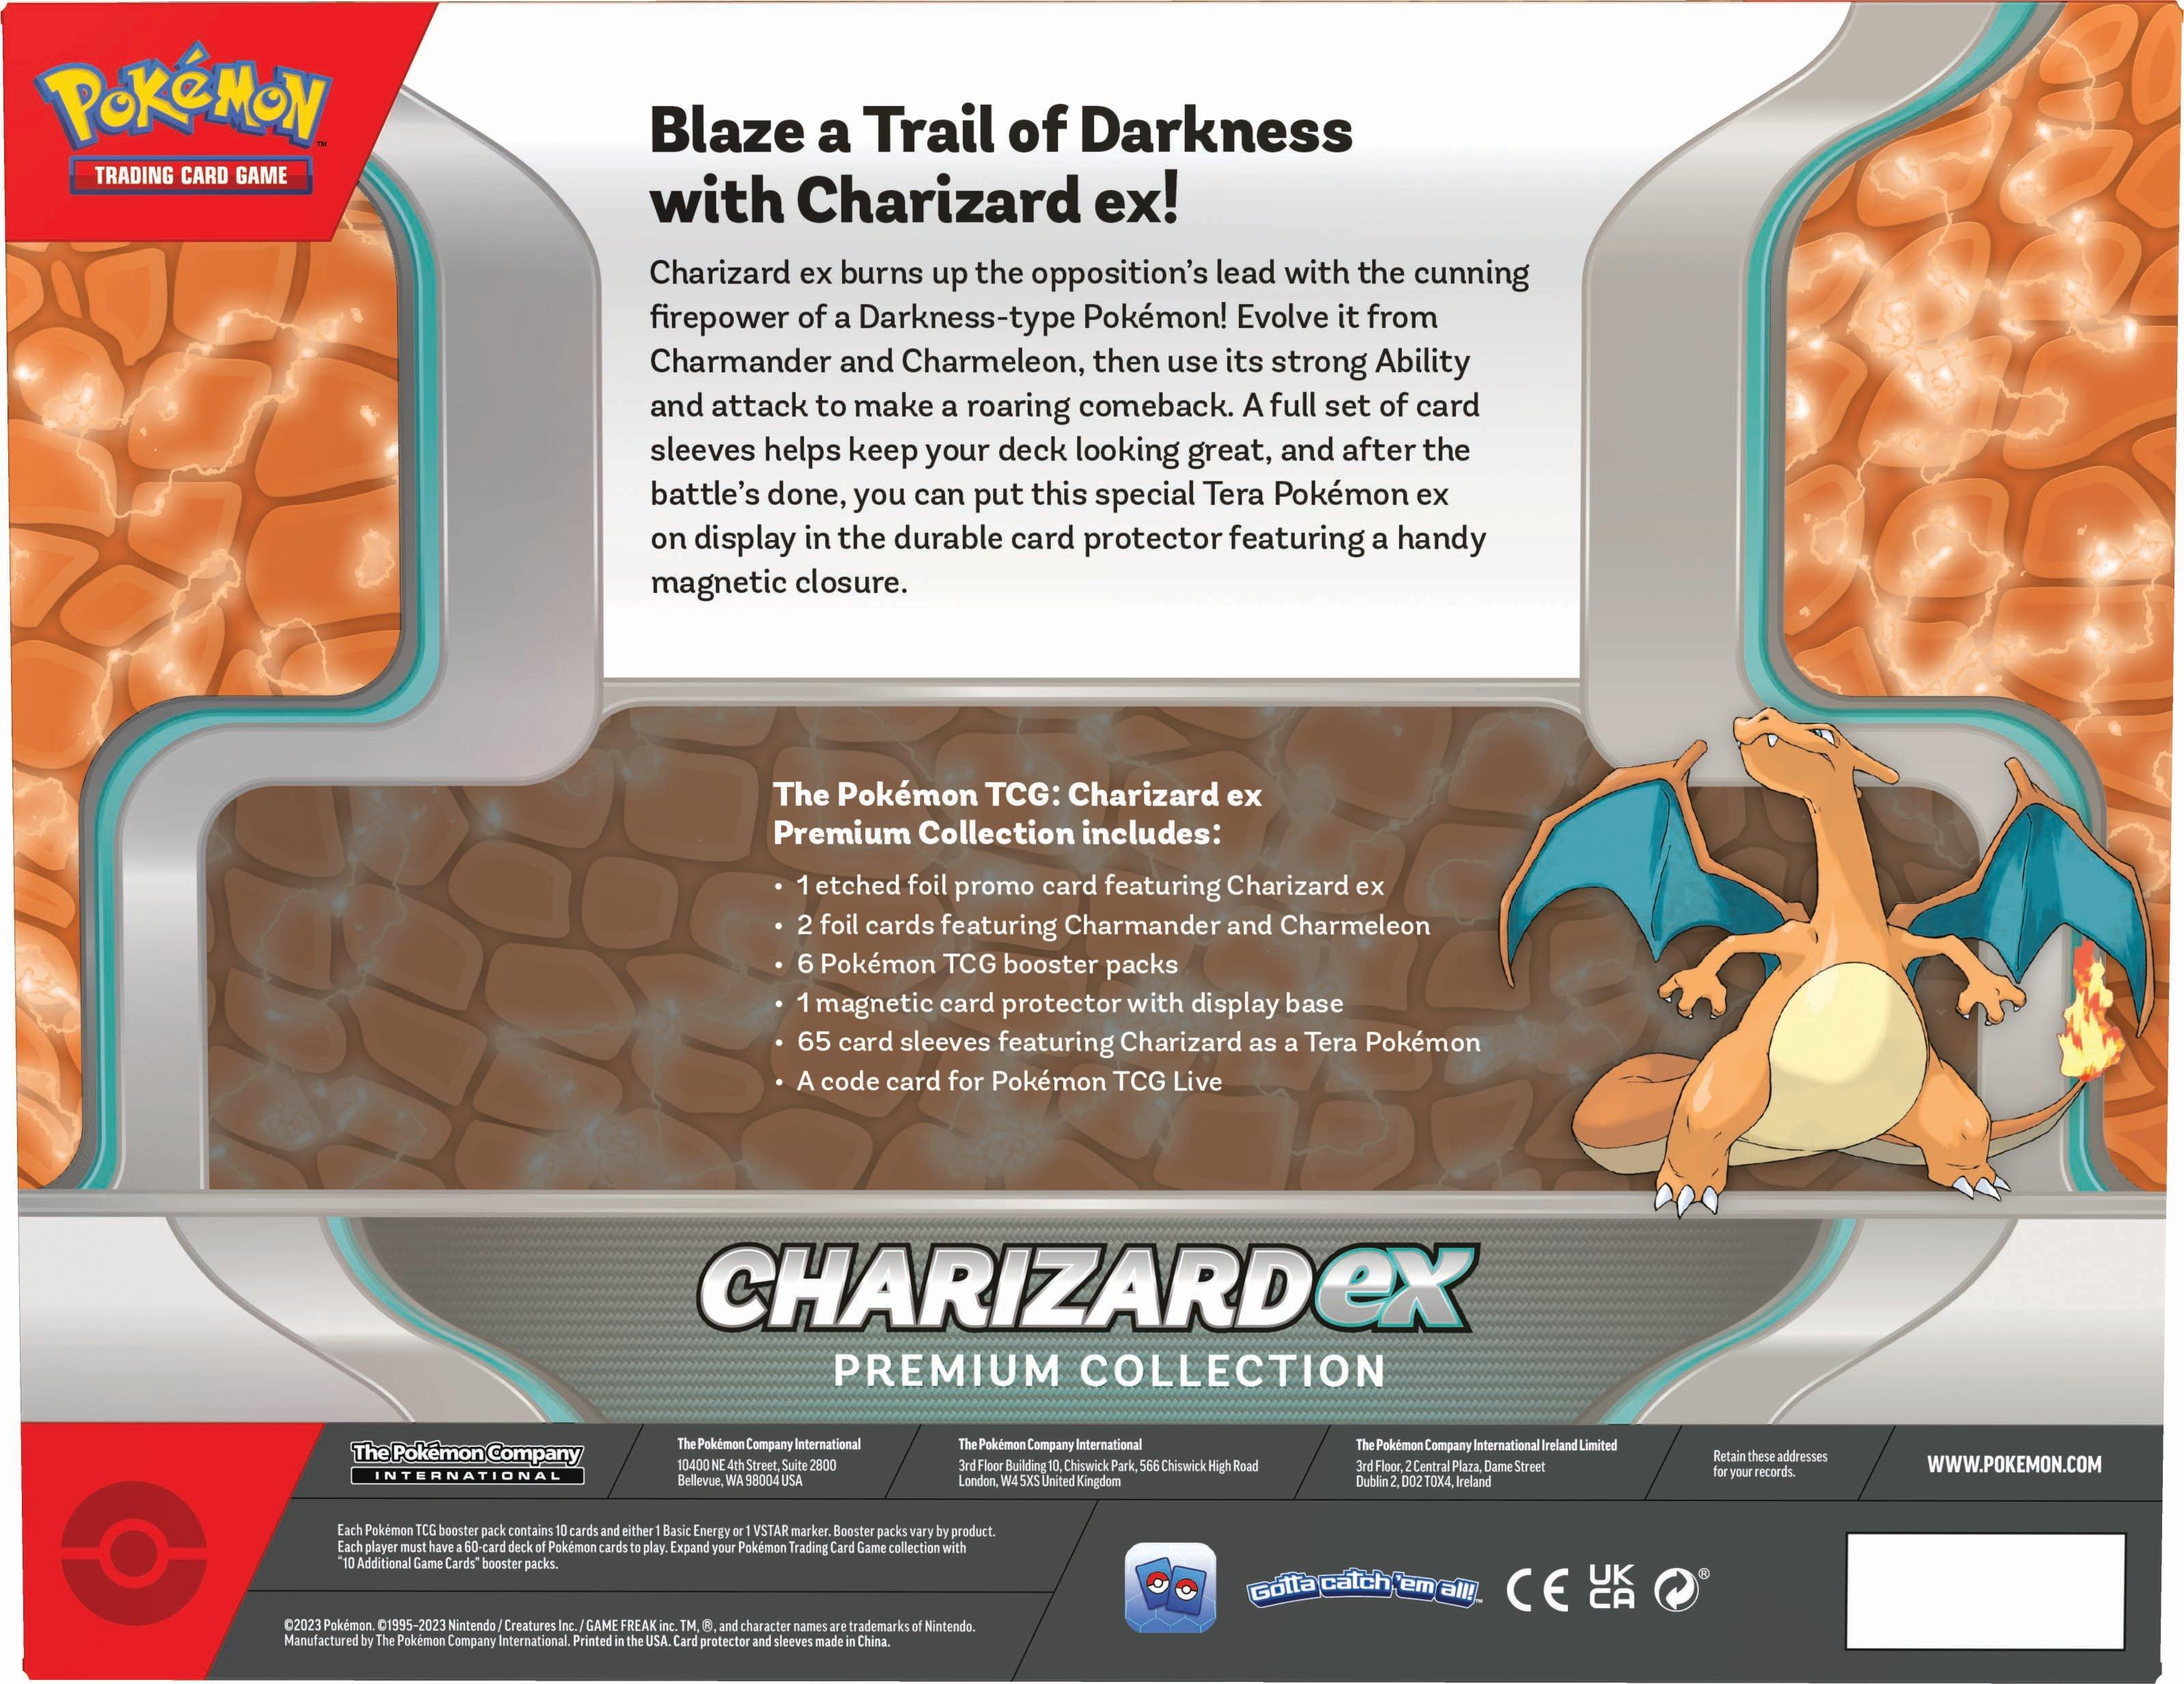 Charizard ex - Pokemon Site